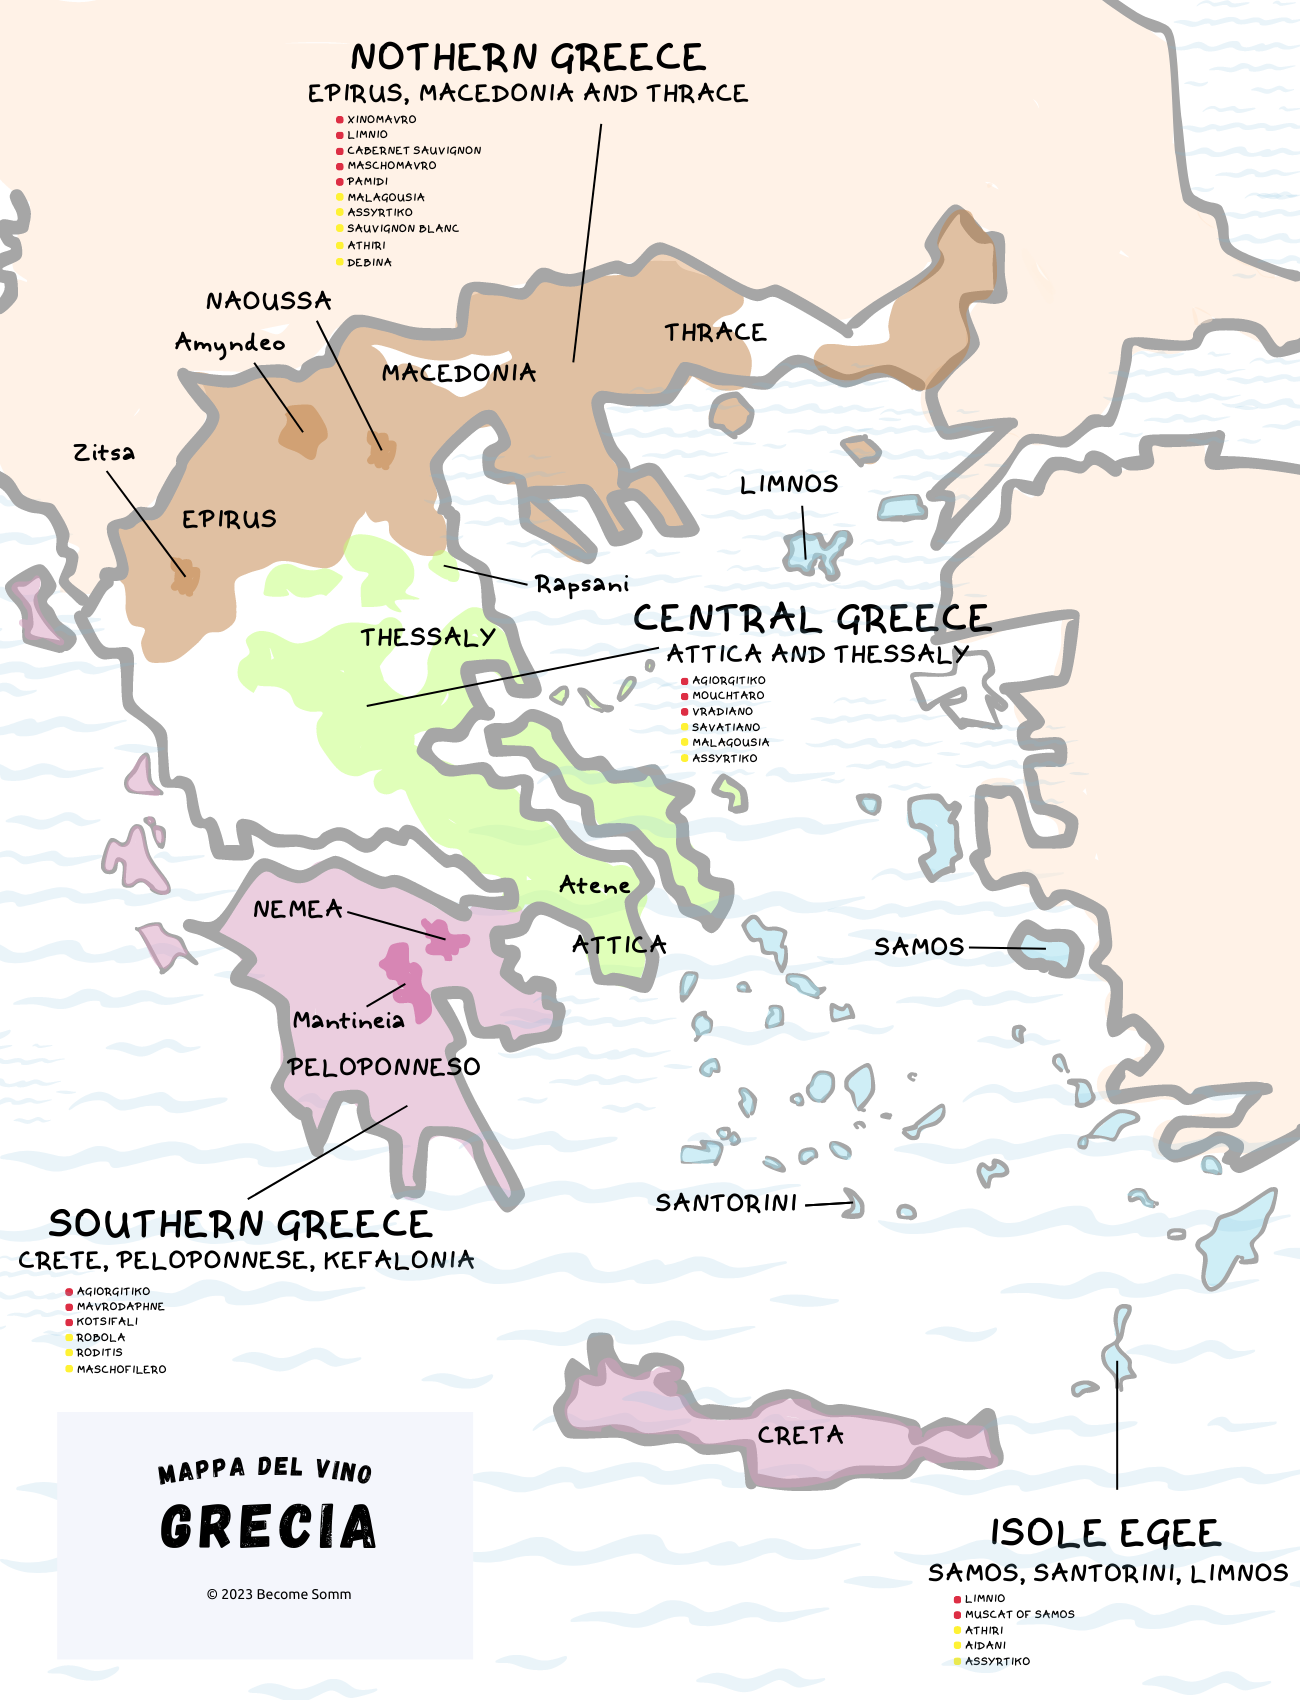 Greece Wine Map Grecia Mappa del vino οινικός χάρτης της Ελλάδας